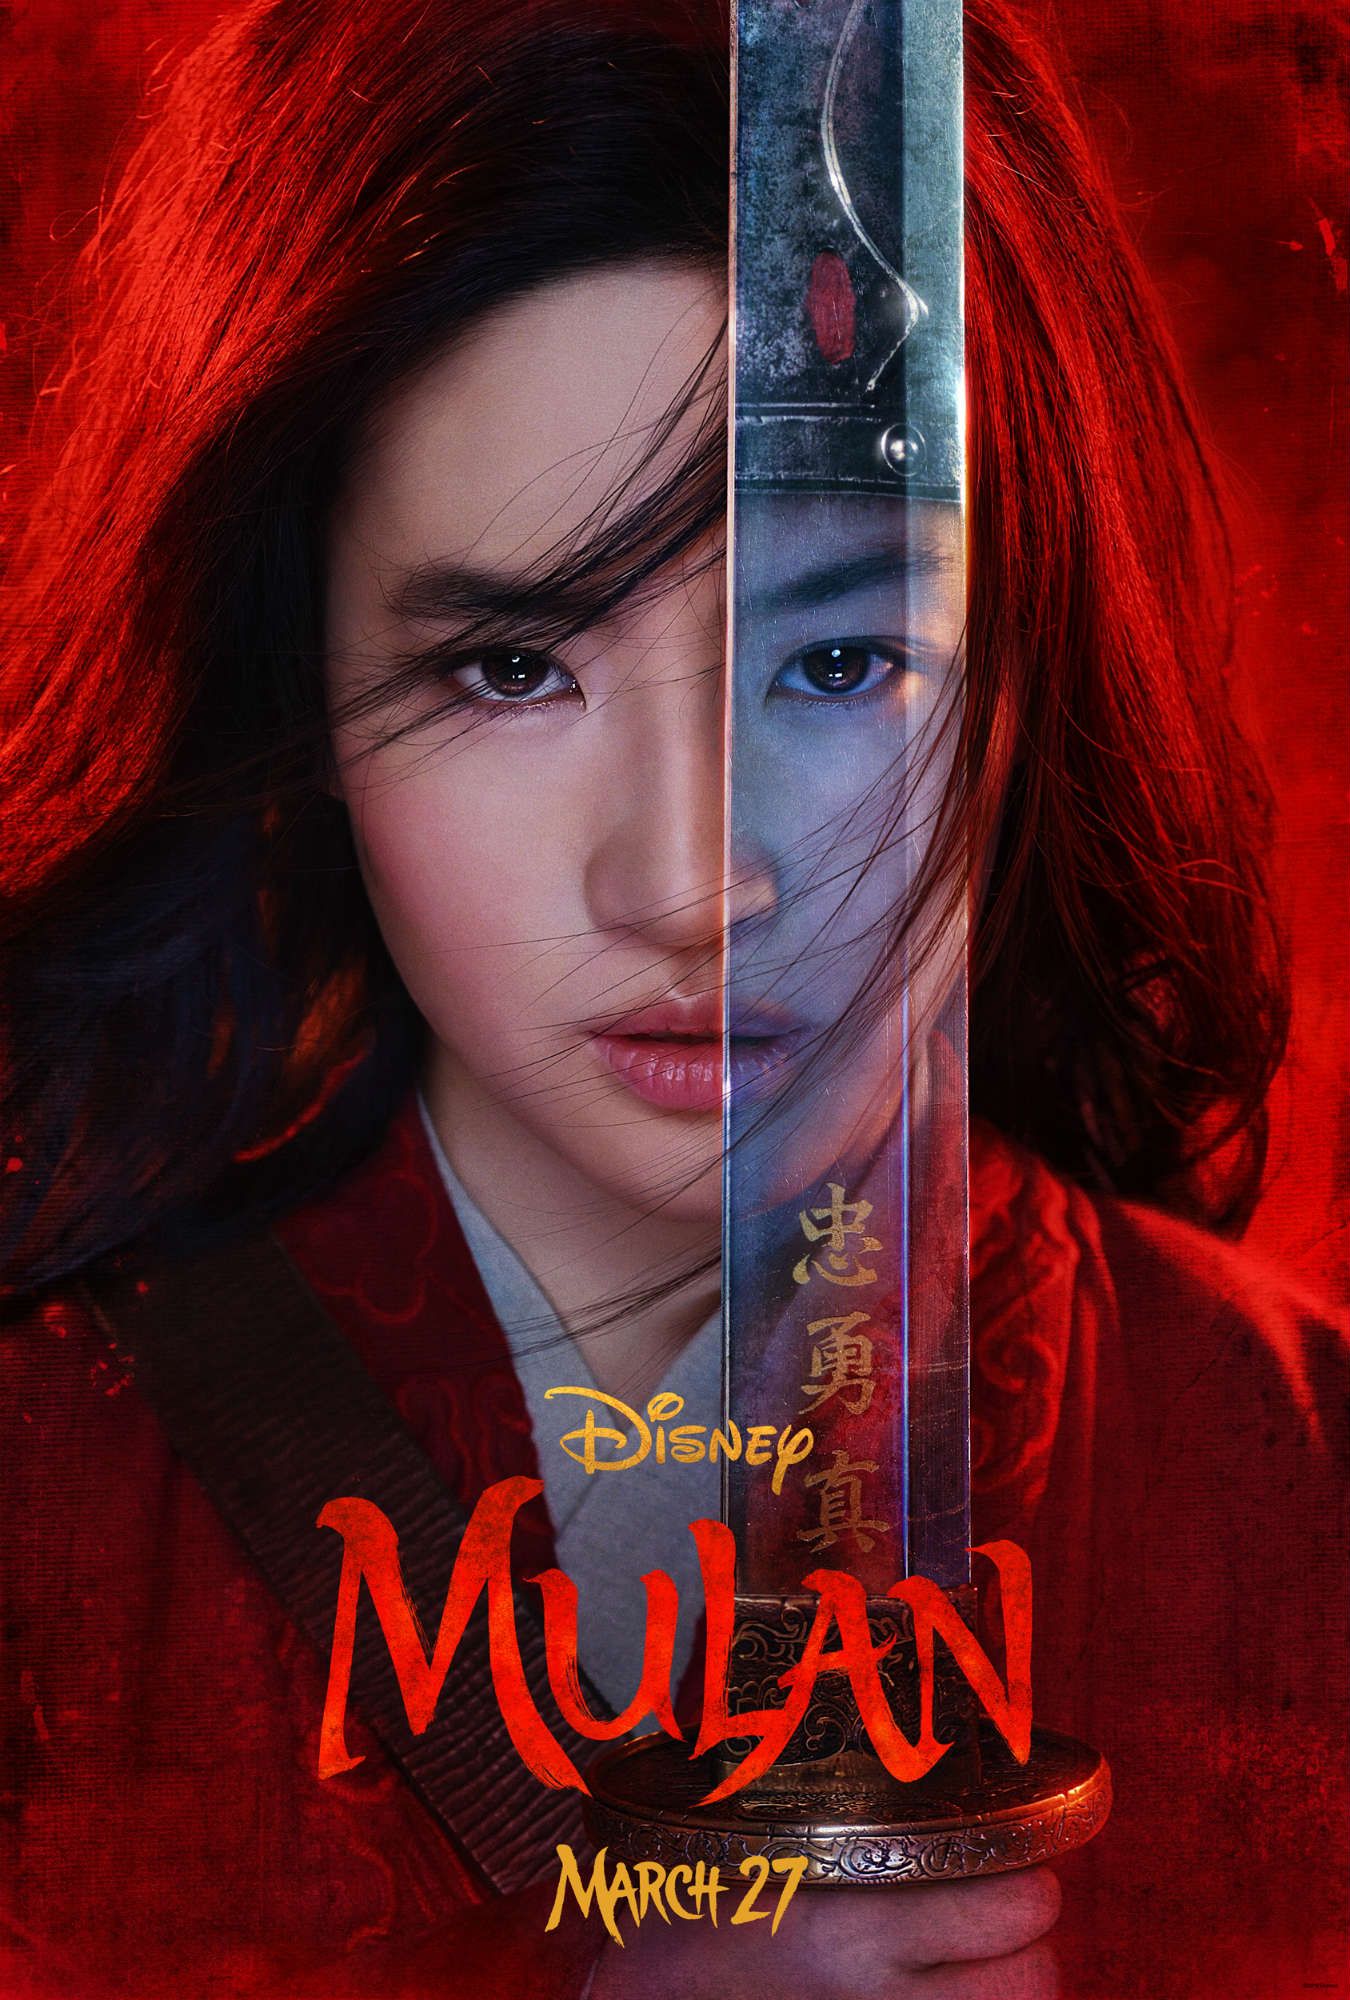 Mulan Super Bowl TV Spot Confirms New Full Trailer Coming Sunday